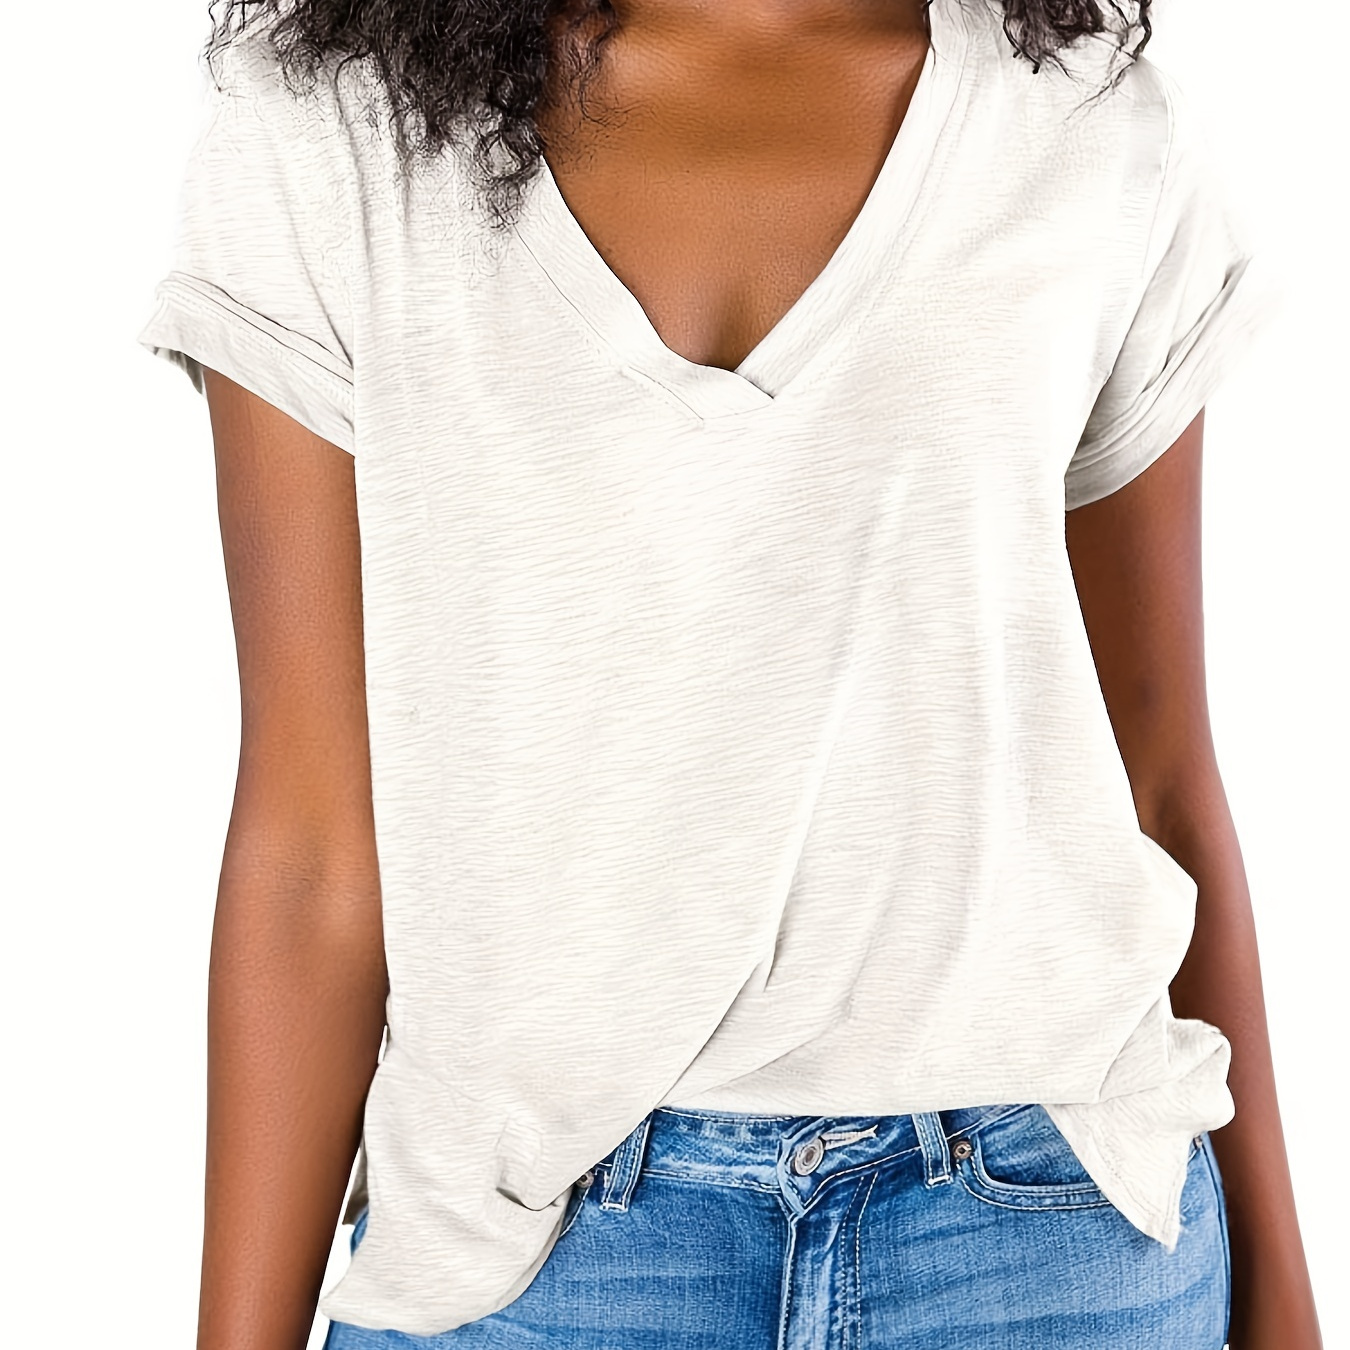 

V Neck Side Slit T-shirt, Casual Loose Short Sleeve Fashion Summer T-shirts Tops, Women's Clothing